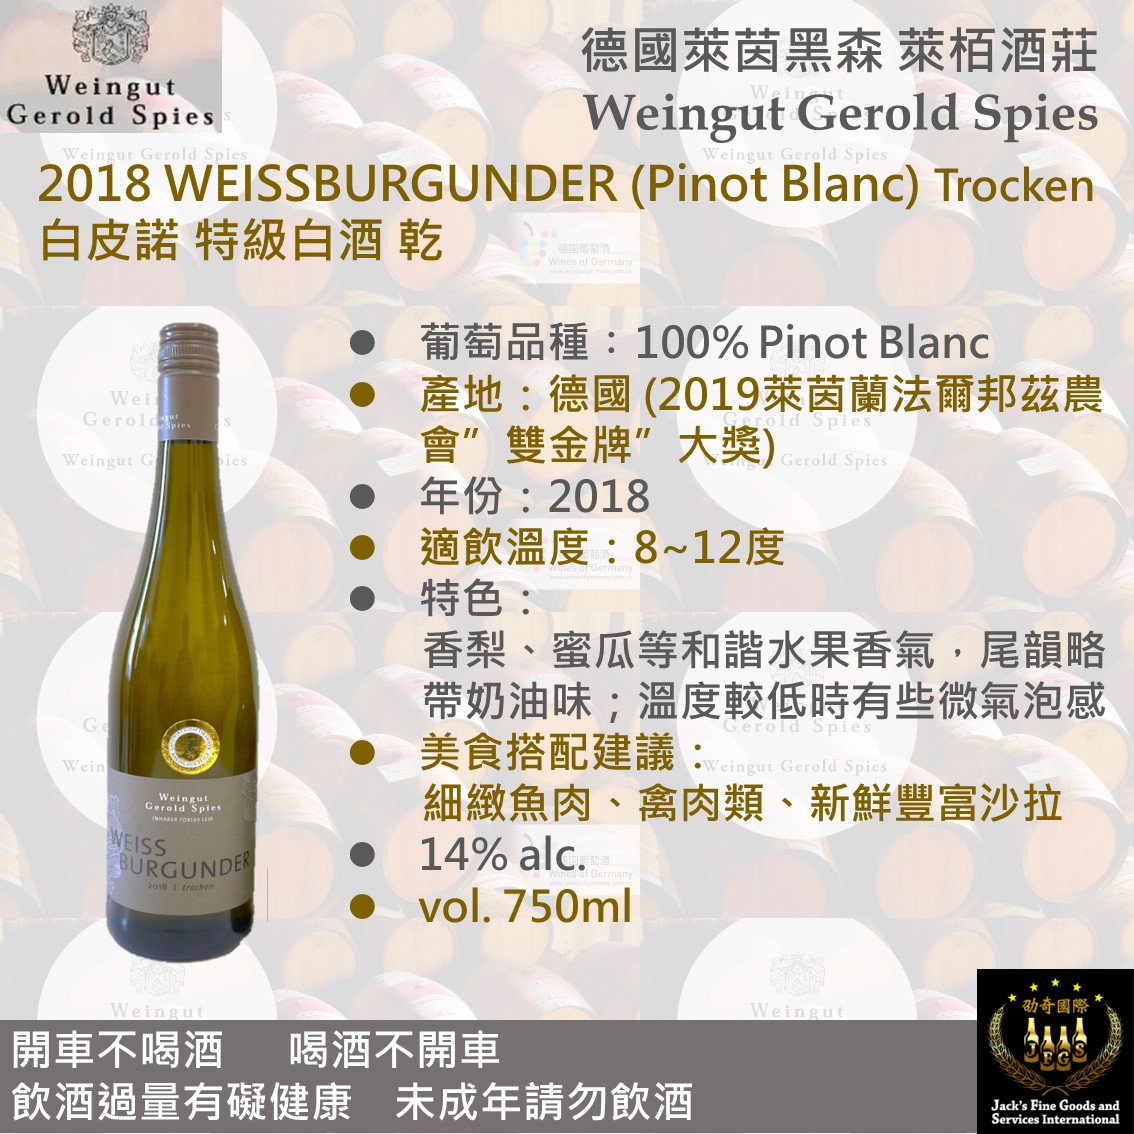 30X30cm 鋁掛軸 德國萊茵黑森 2018 Weissburgunder (Pinot Blanc) 白皮諾 - 特級白酒 乾